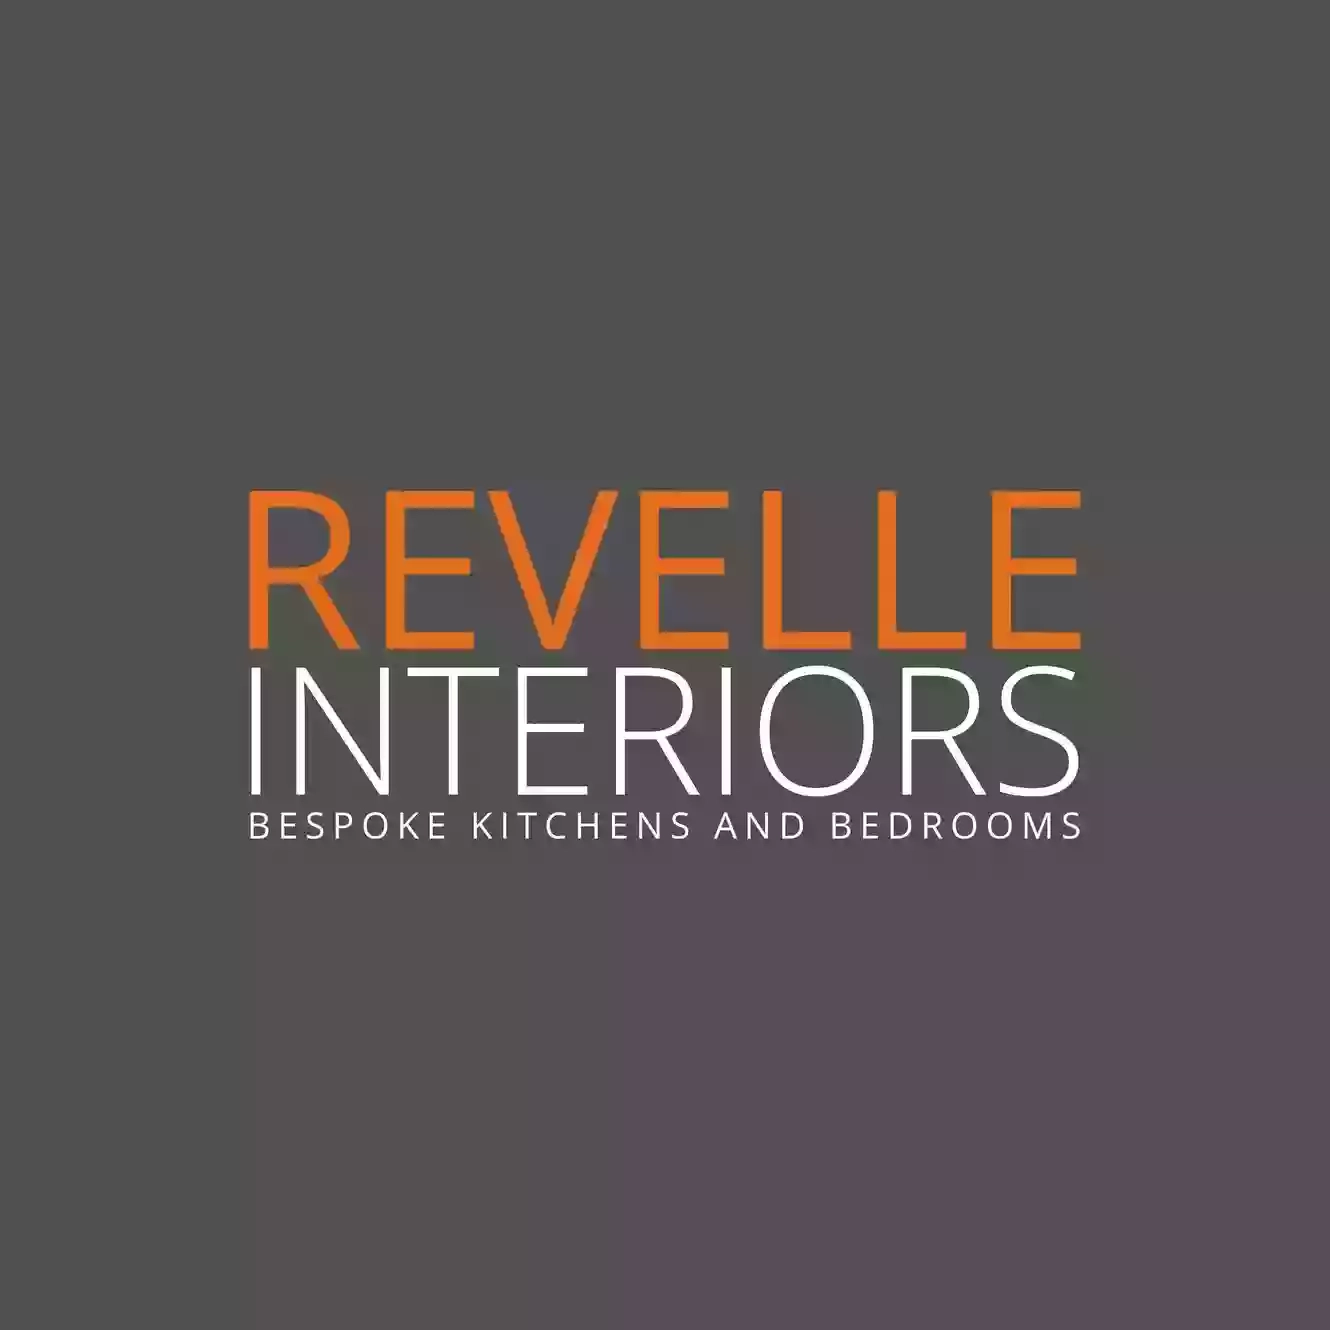 Revelle Interiors Ltd